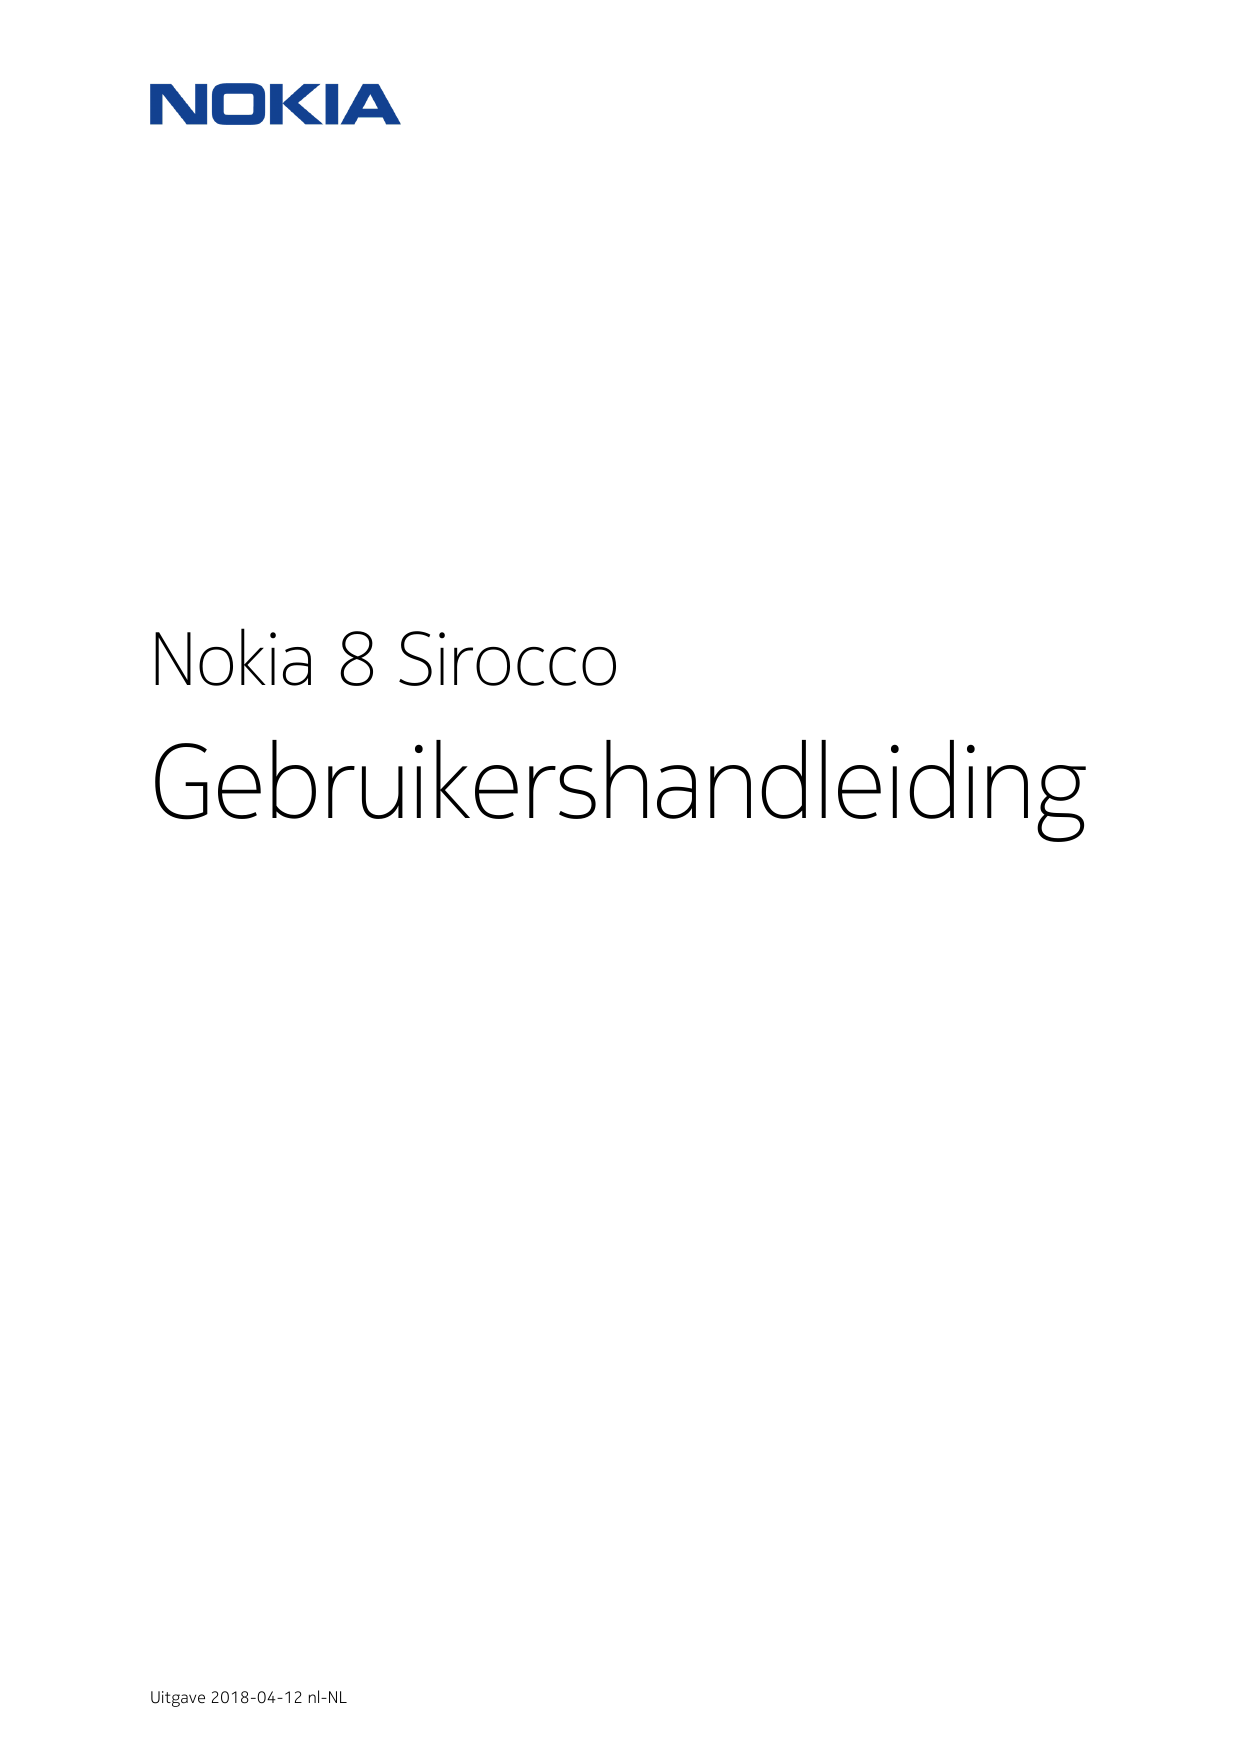 Nokia 8 SiroccoGebruikershandleidingUitgave 2018-04-12 nl-NL